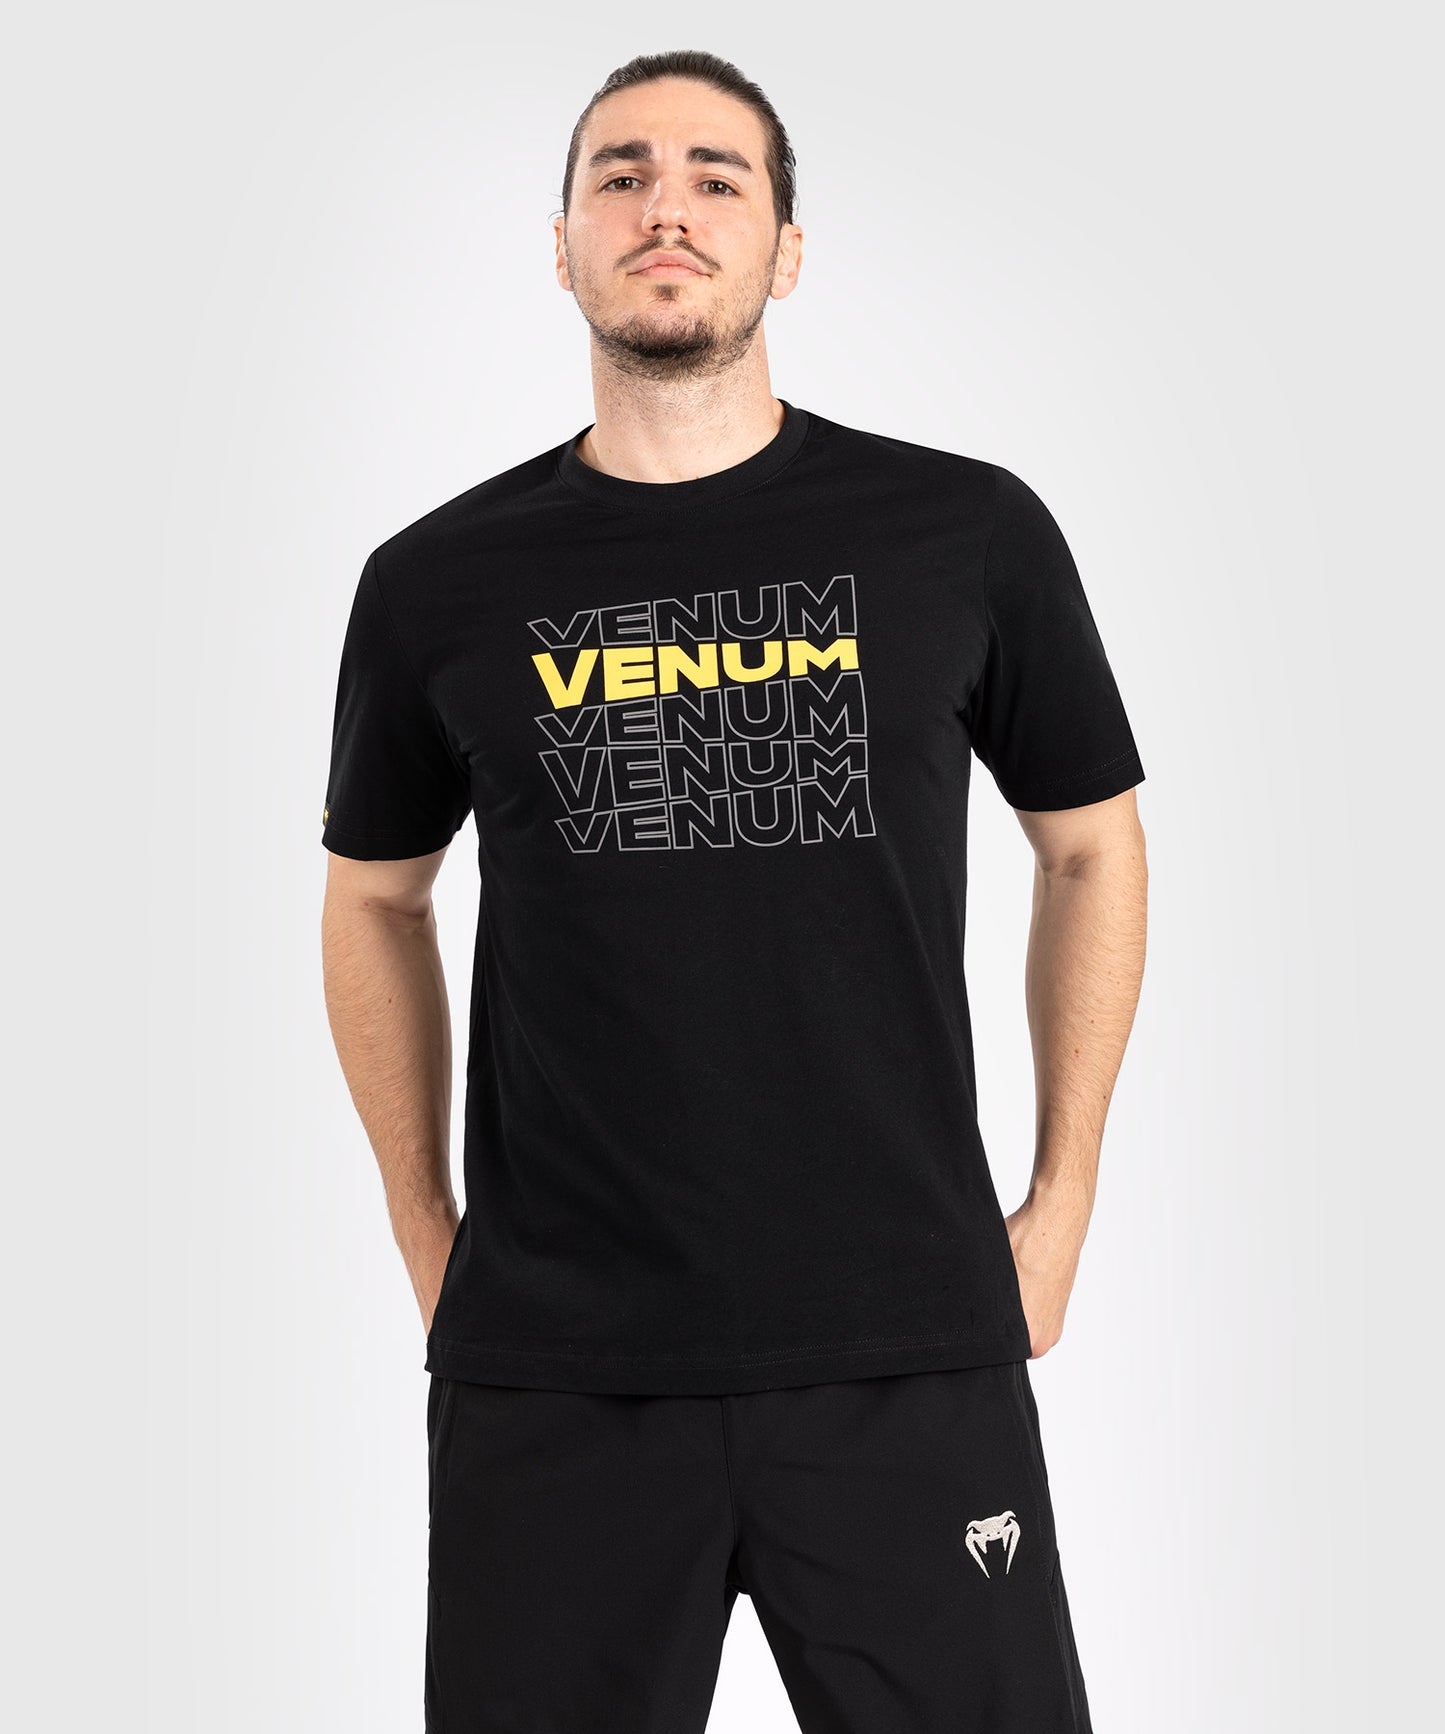 Venum Vertigo Men's Short Sleeve T-shirt - Black/Yellow